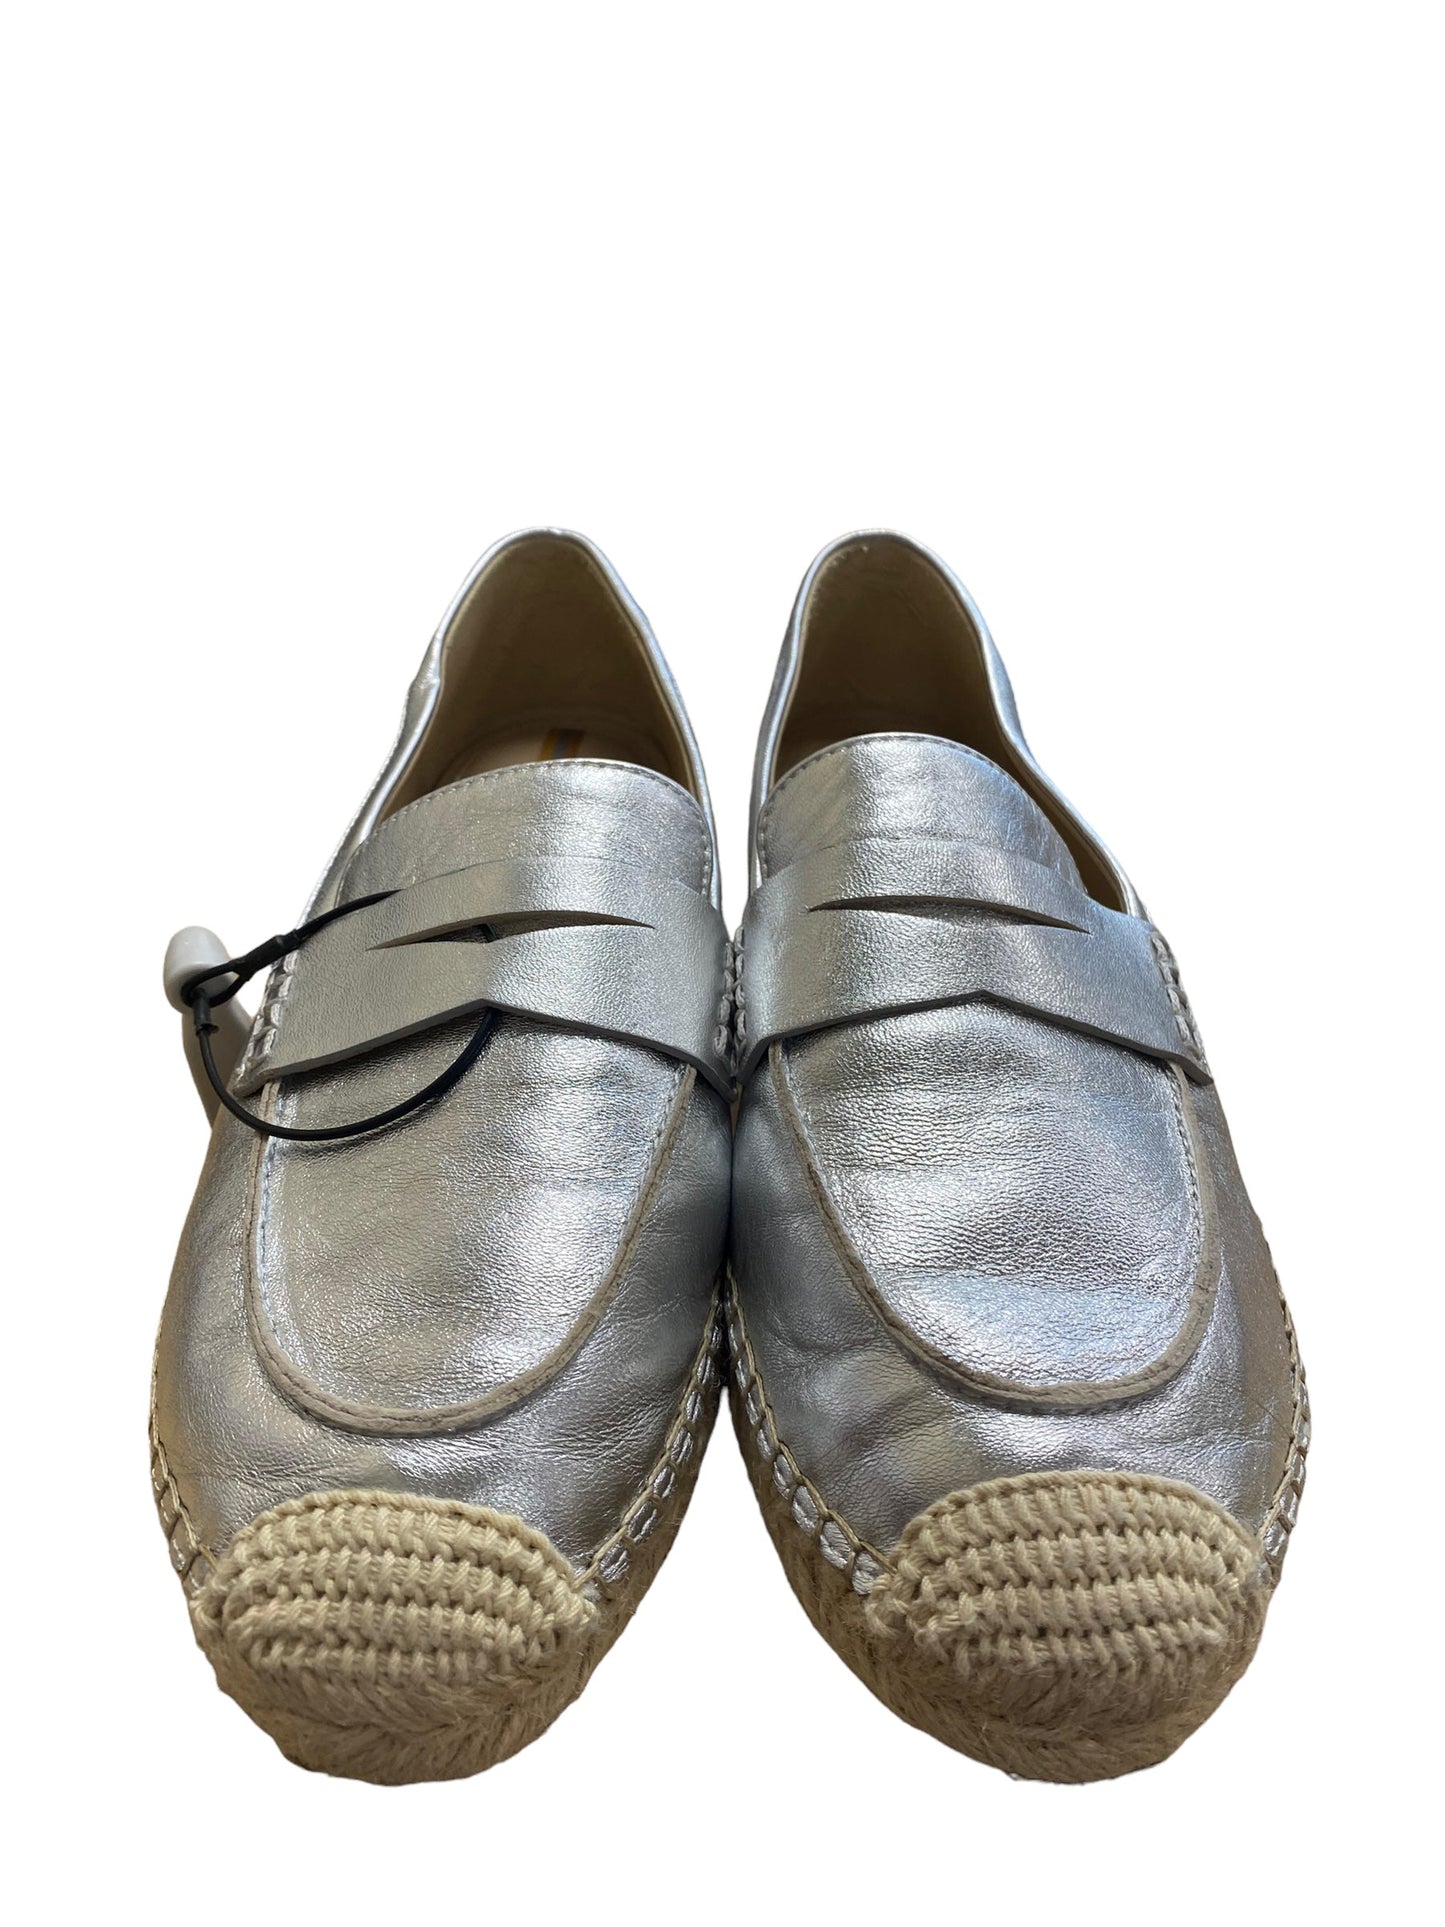 Shoes Flats By Sam Edelman  Size: 8